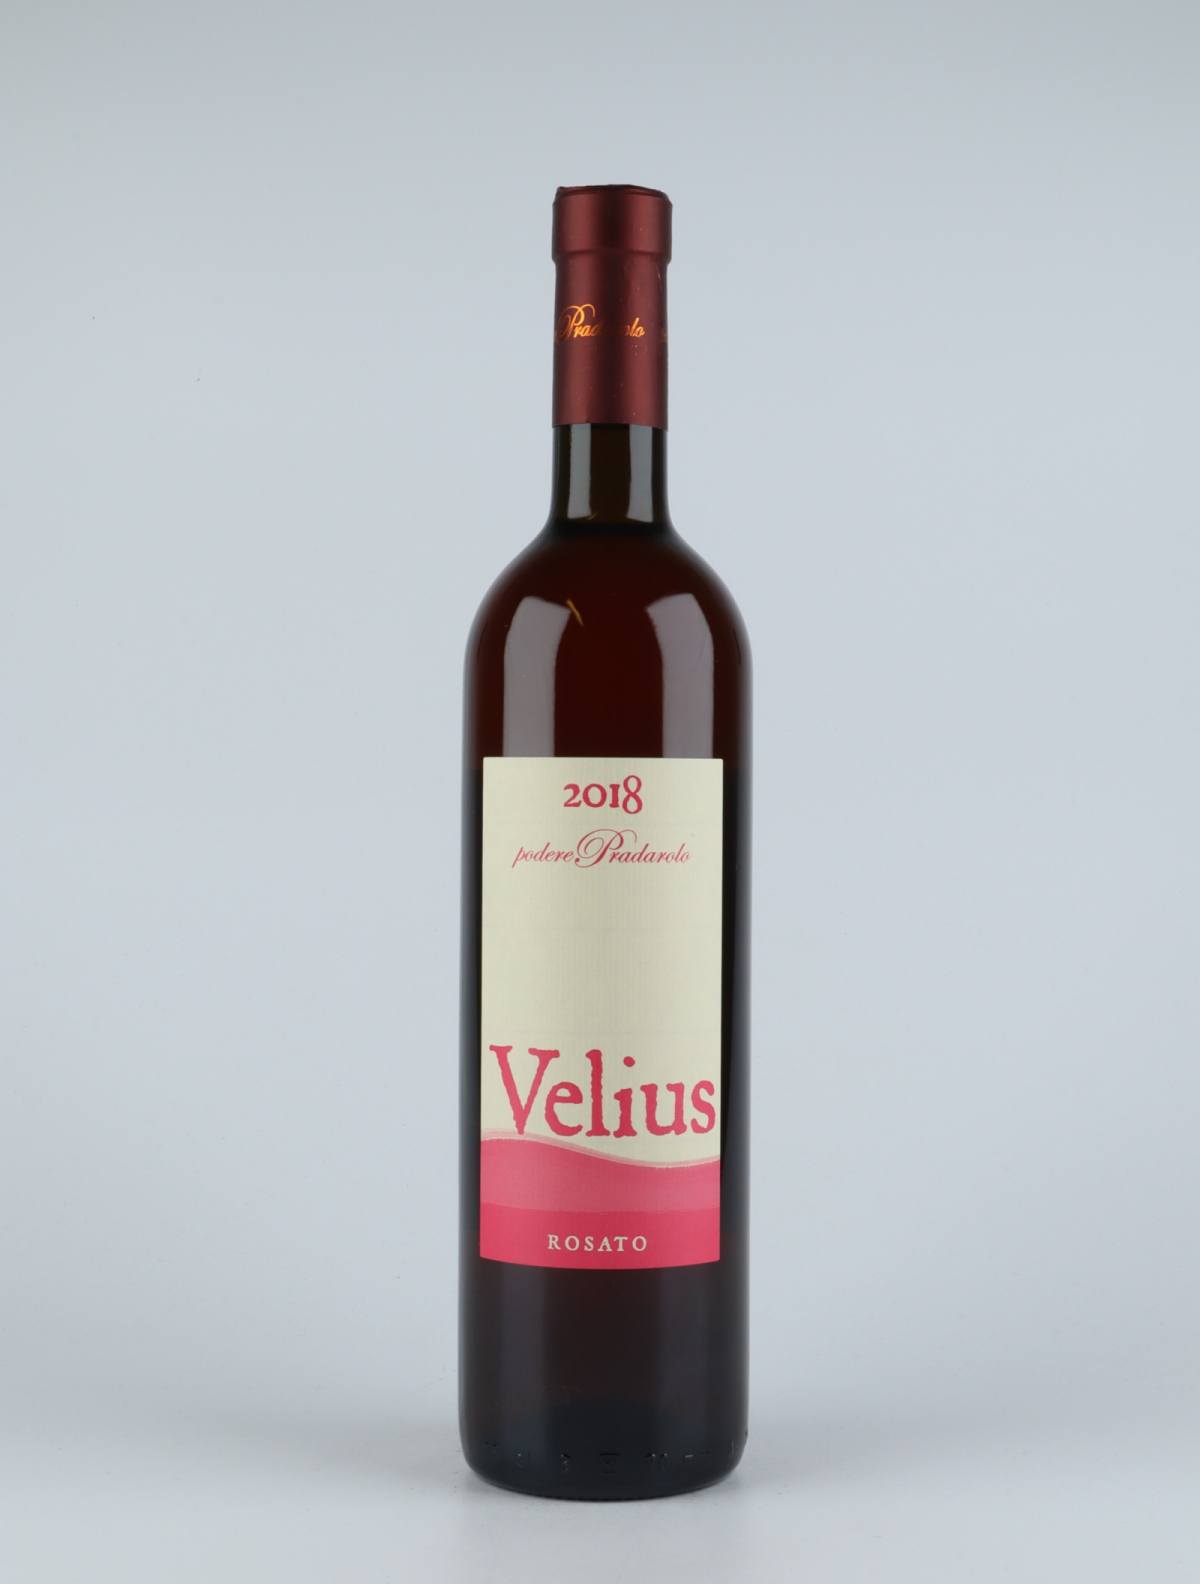 A bottle 2018 Velius Rosato Rosé from Podere Pradarolo, Emilia-Romagna in Italy